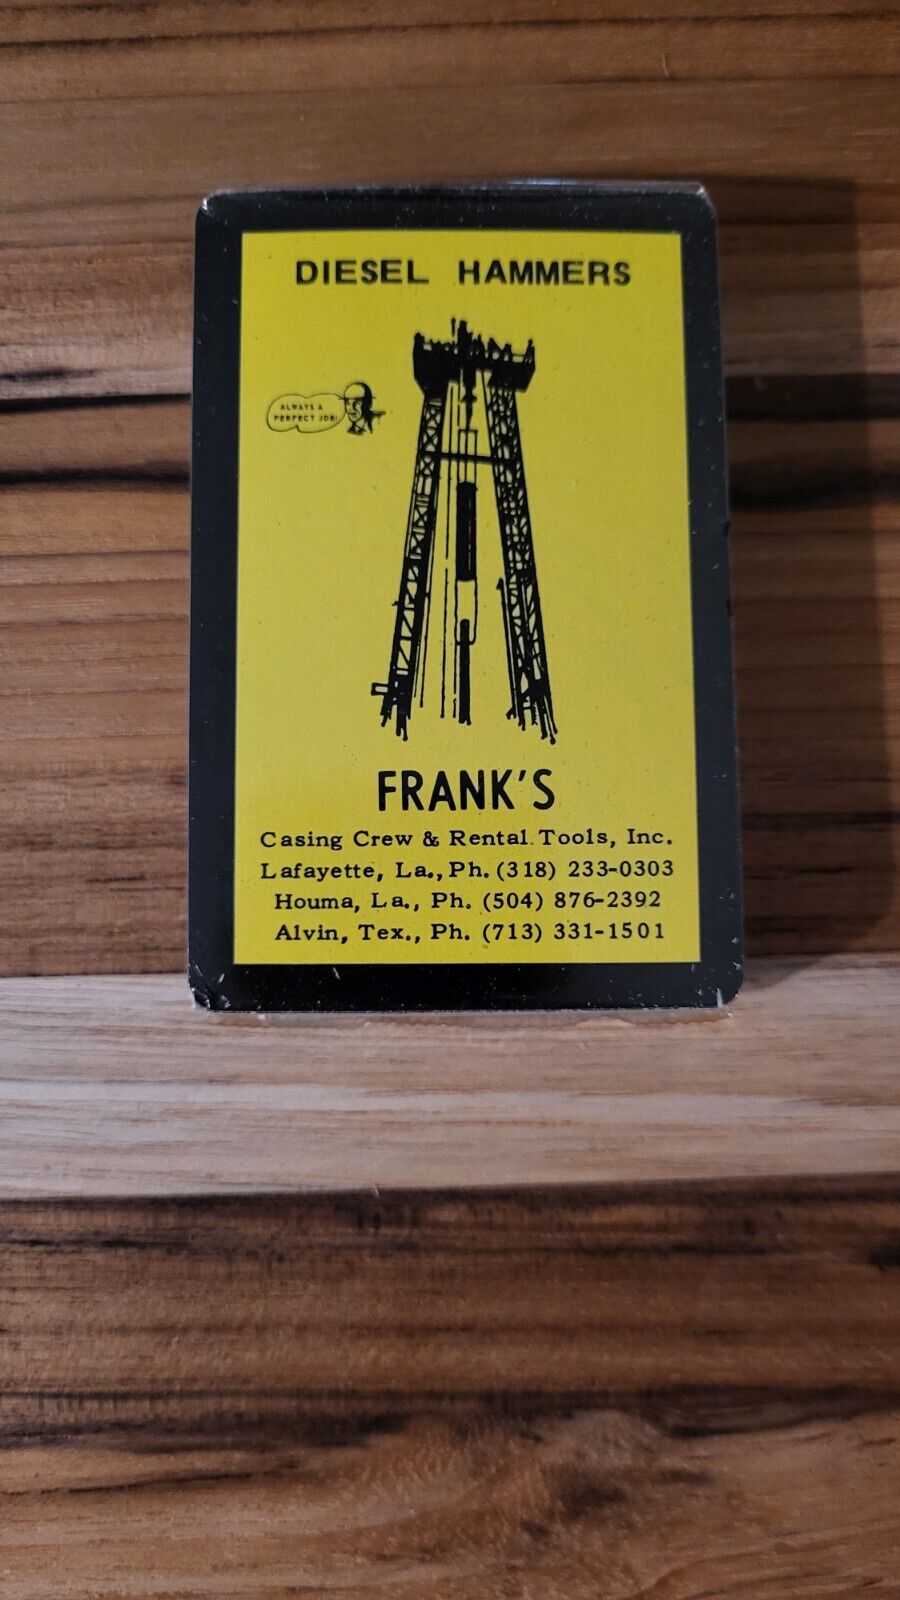 Franks Diesel Hammers Lafayette La Playing Cards Sealed w/ Box NOS Alvin Tx Vtg 